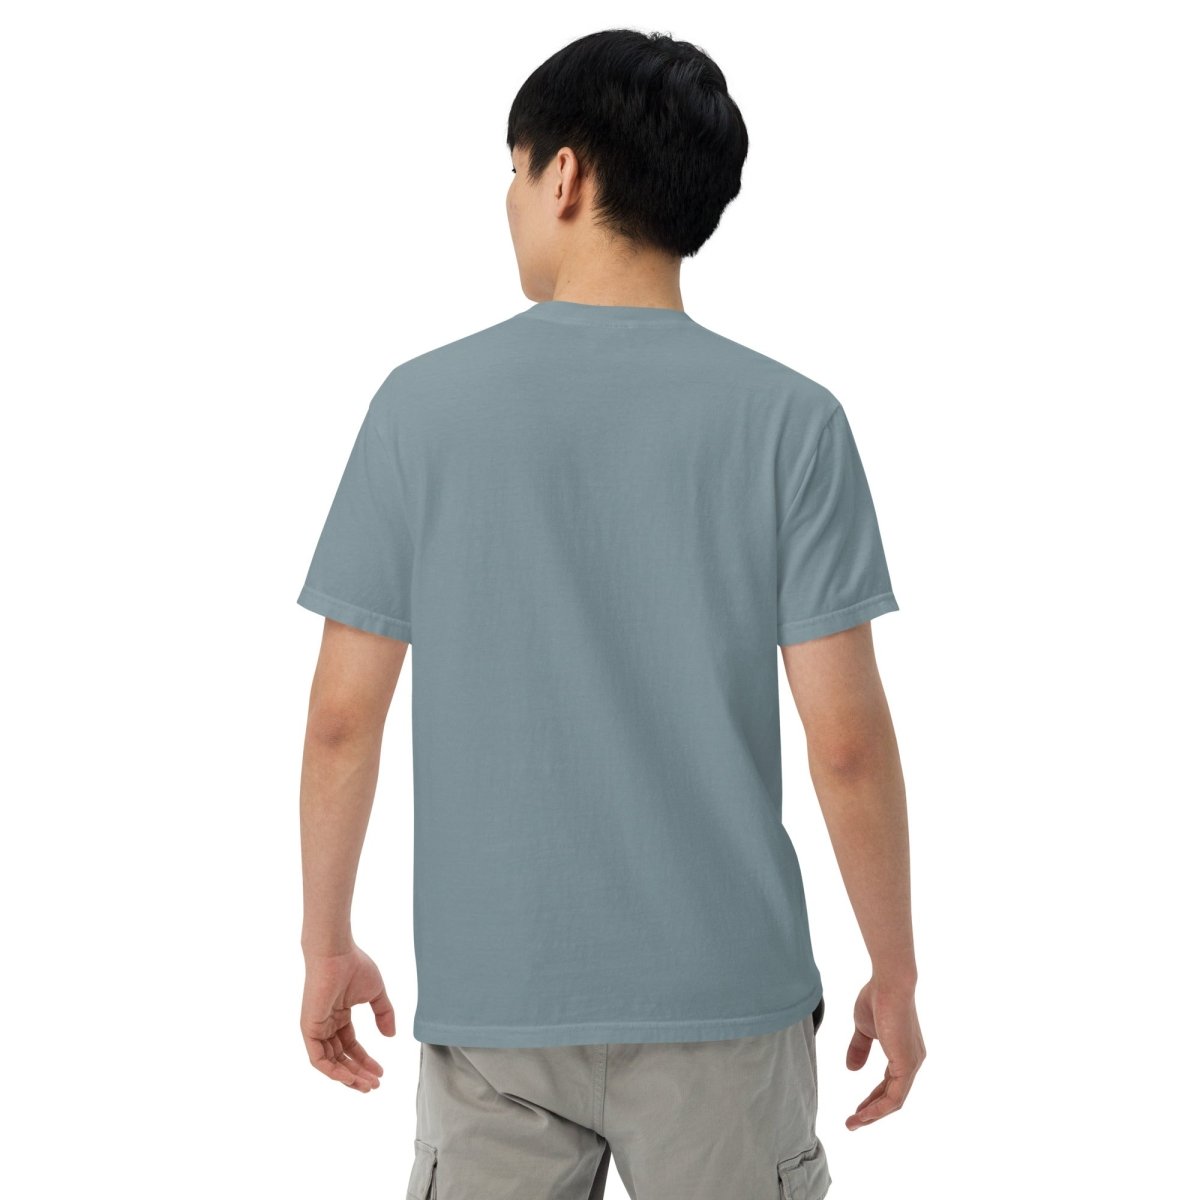 Unisex garment-dyed heavyweight t-shirt - Wifler Industries--Wifler Industries-3408529_16517--Ice Blue-S--Unisex garment-dyed